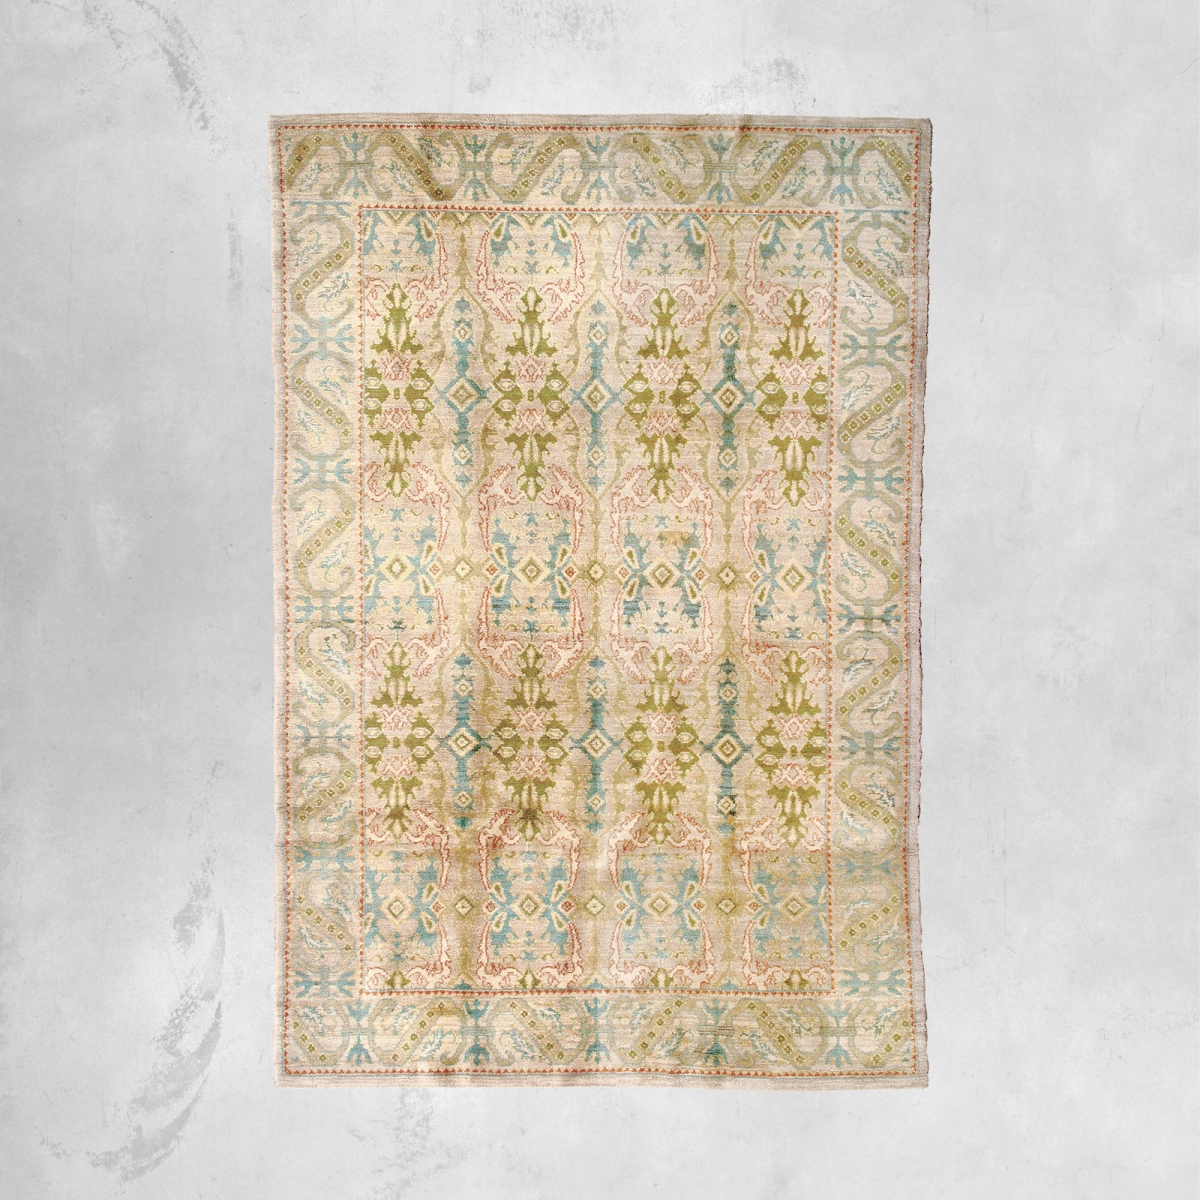 Cuenca Carpet | 182 x 166 cm Antique carpets - Spain  pic-1